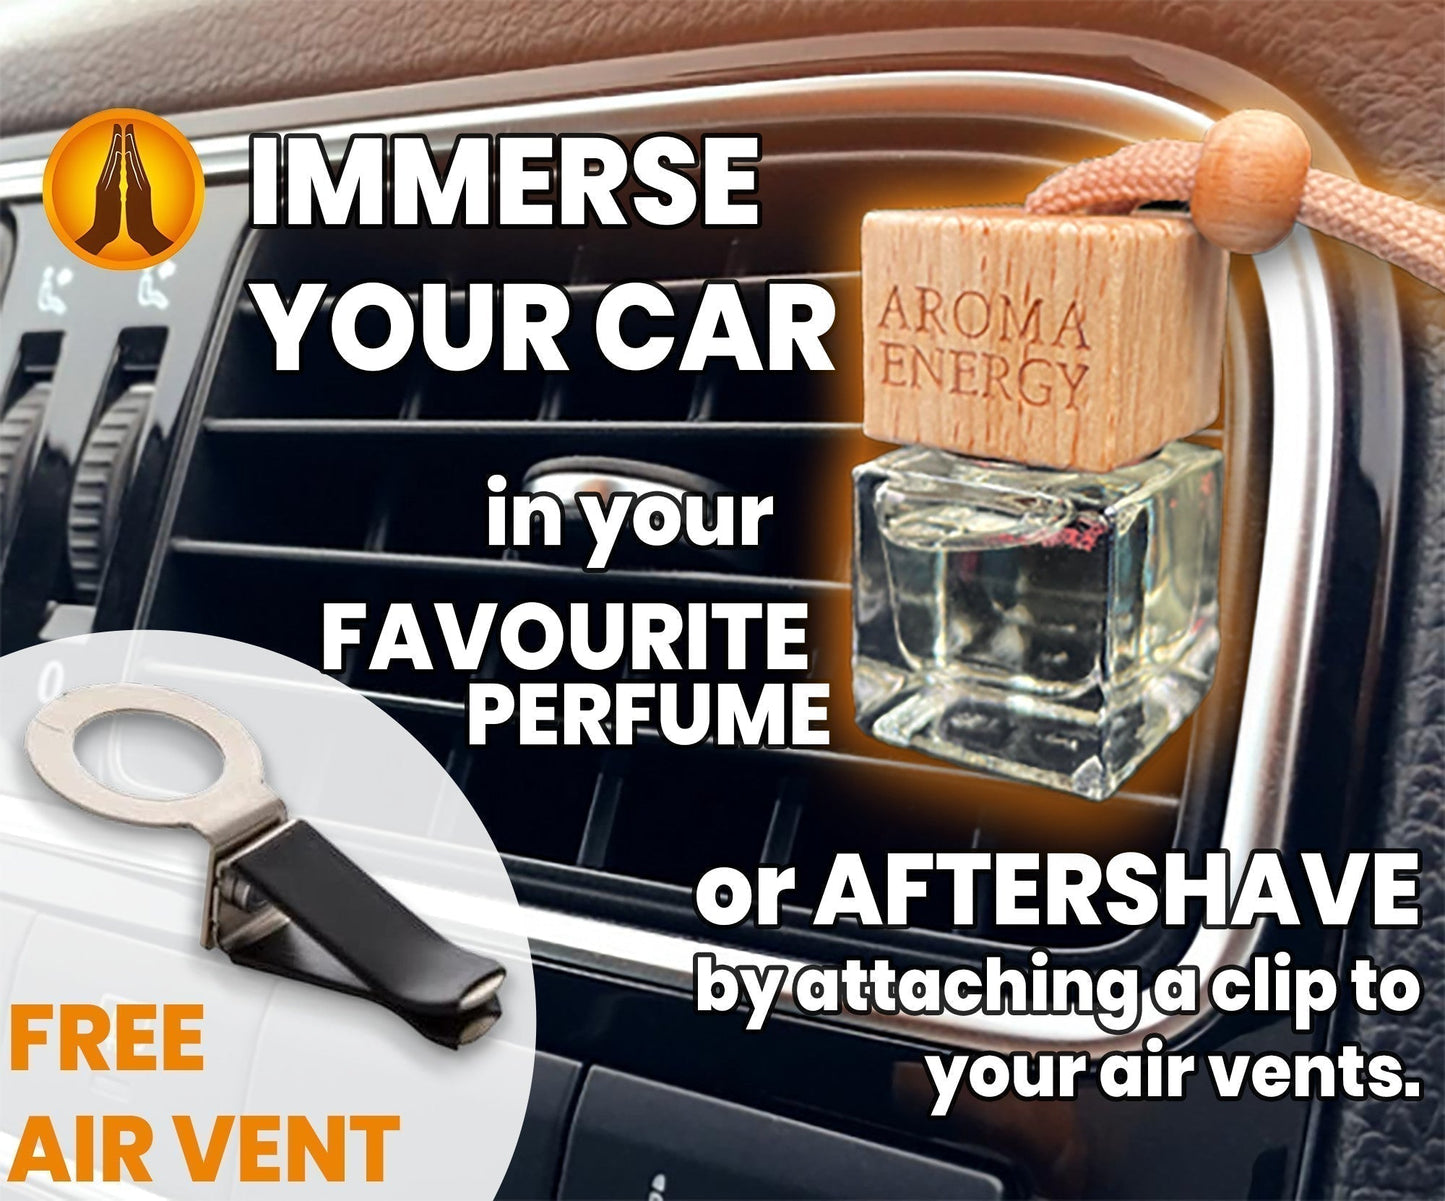 Savage Car Aroma Diffuser: Long-Lasting, Stylish & Compact Fragrance Dispenser